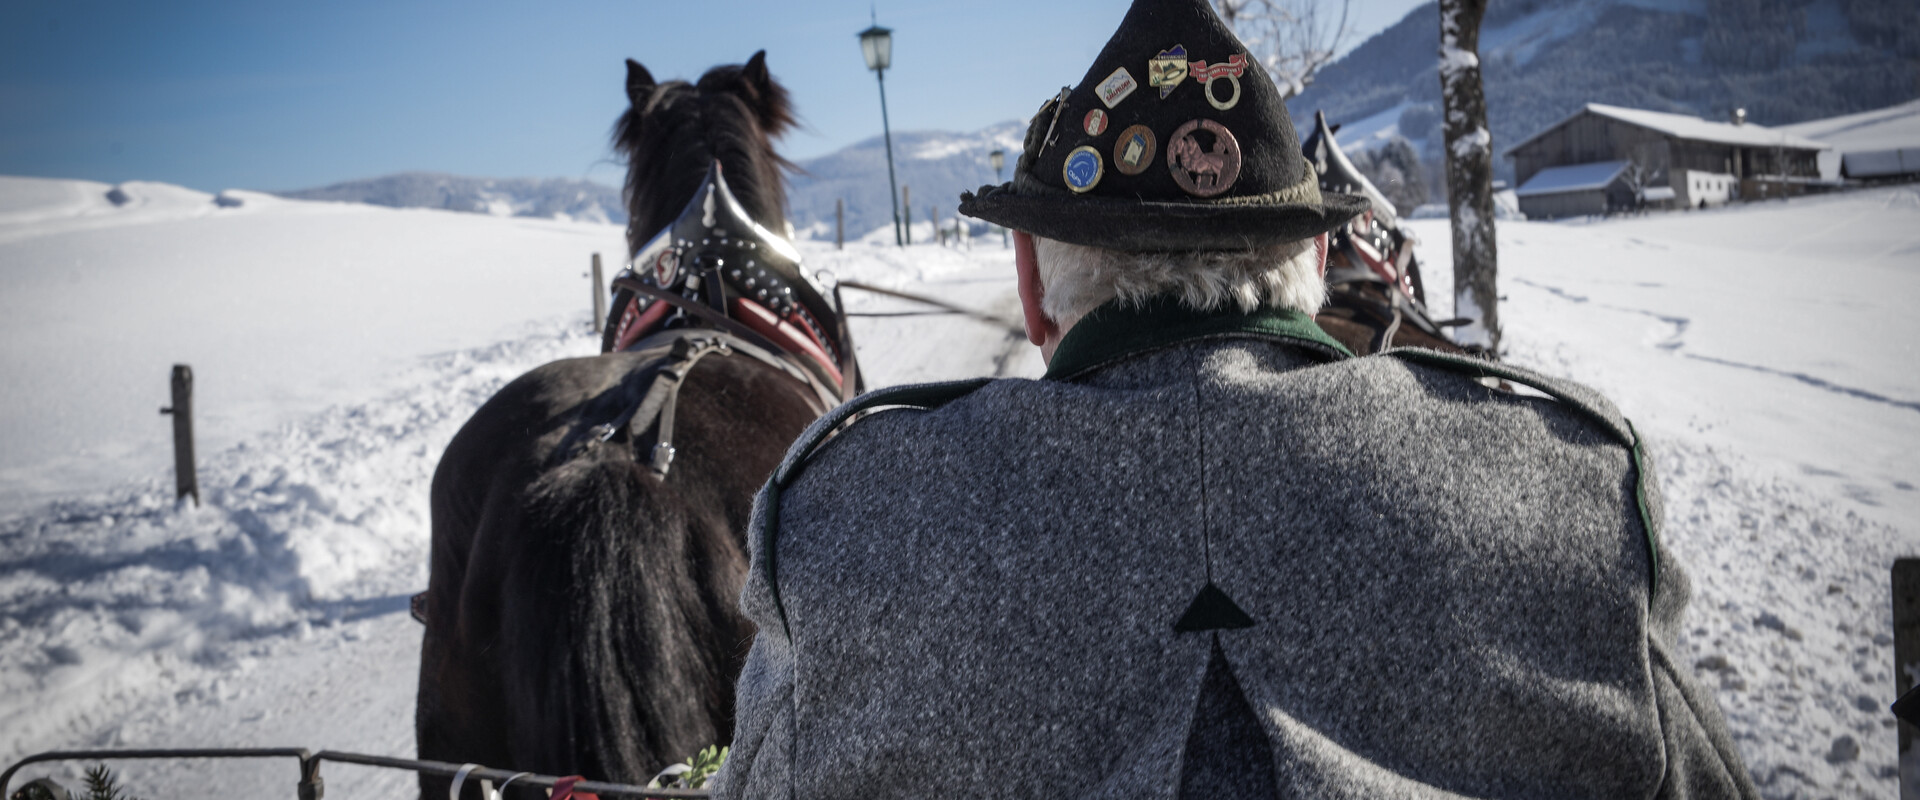 Horse sleigh ride in untouched winter landscapes in Saalfelden Leogang